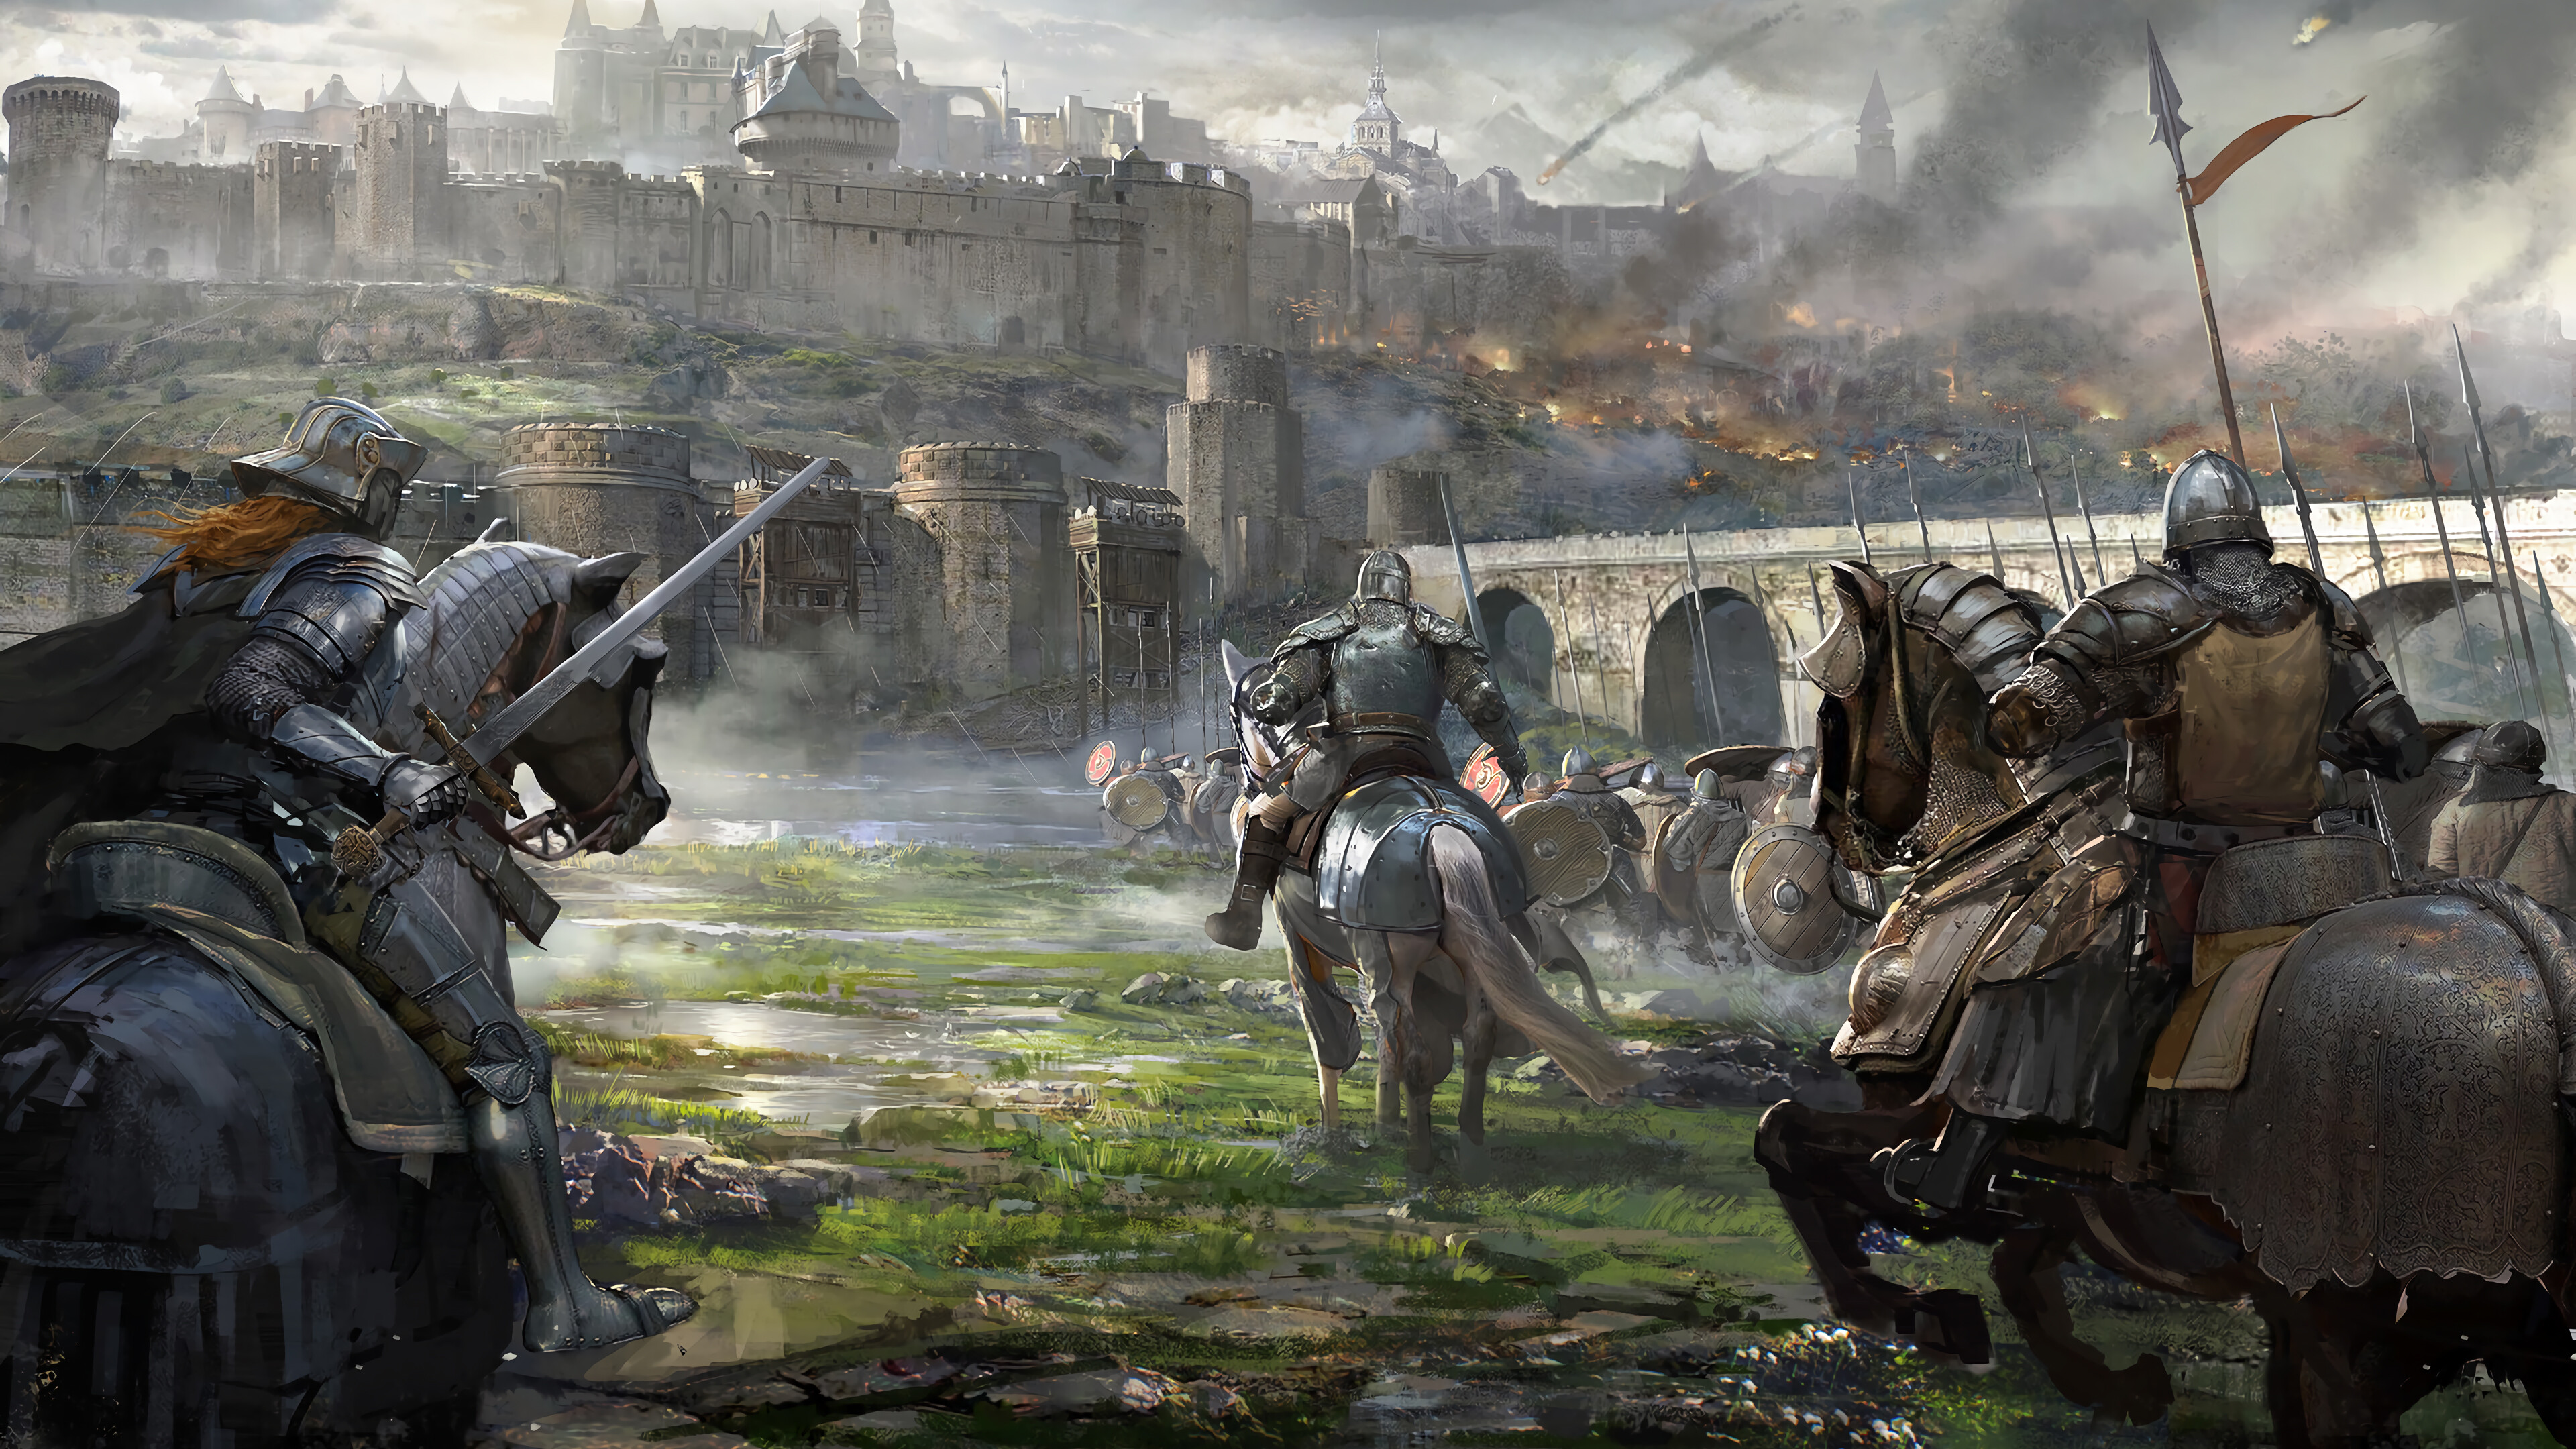 Knight Castle Siege Medieval Battle Fantasy 4K Wallpaper 4973